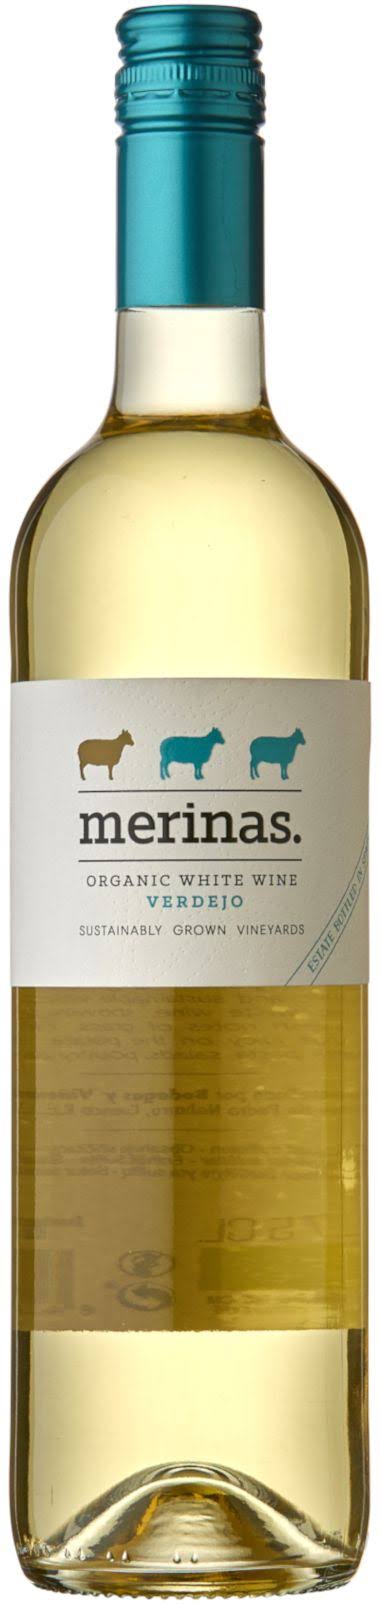 Merinas Verdejo - Mitchell & Son Wine Merchants